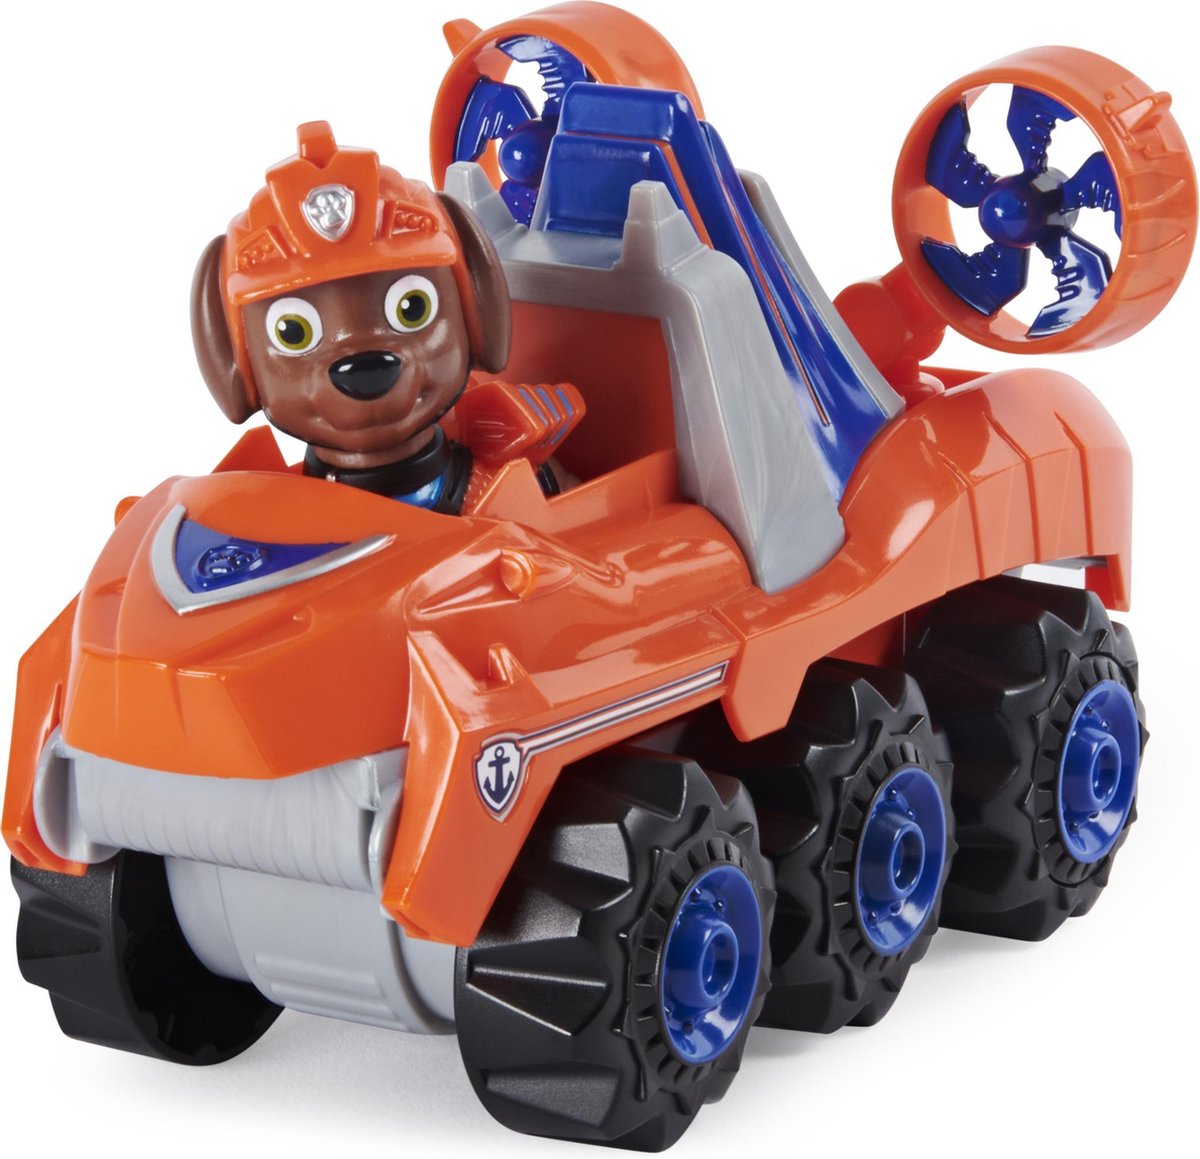 Spinmaster Nickelodeon speelset Dino Rescue Zuma Paw Patrol oranje/blauw